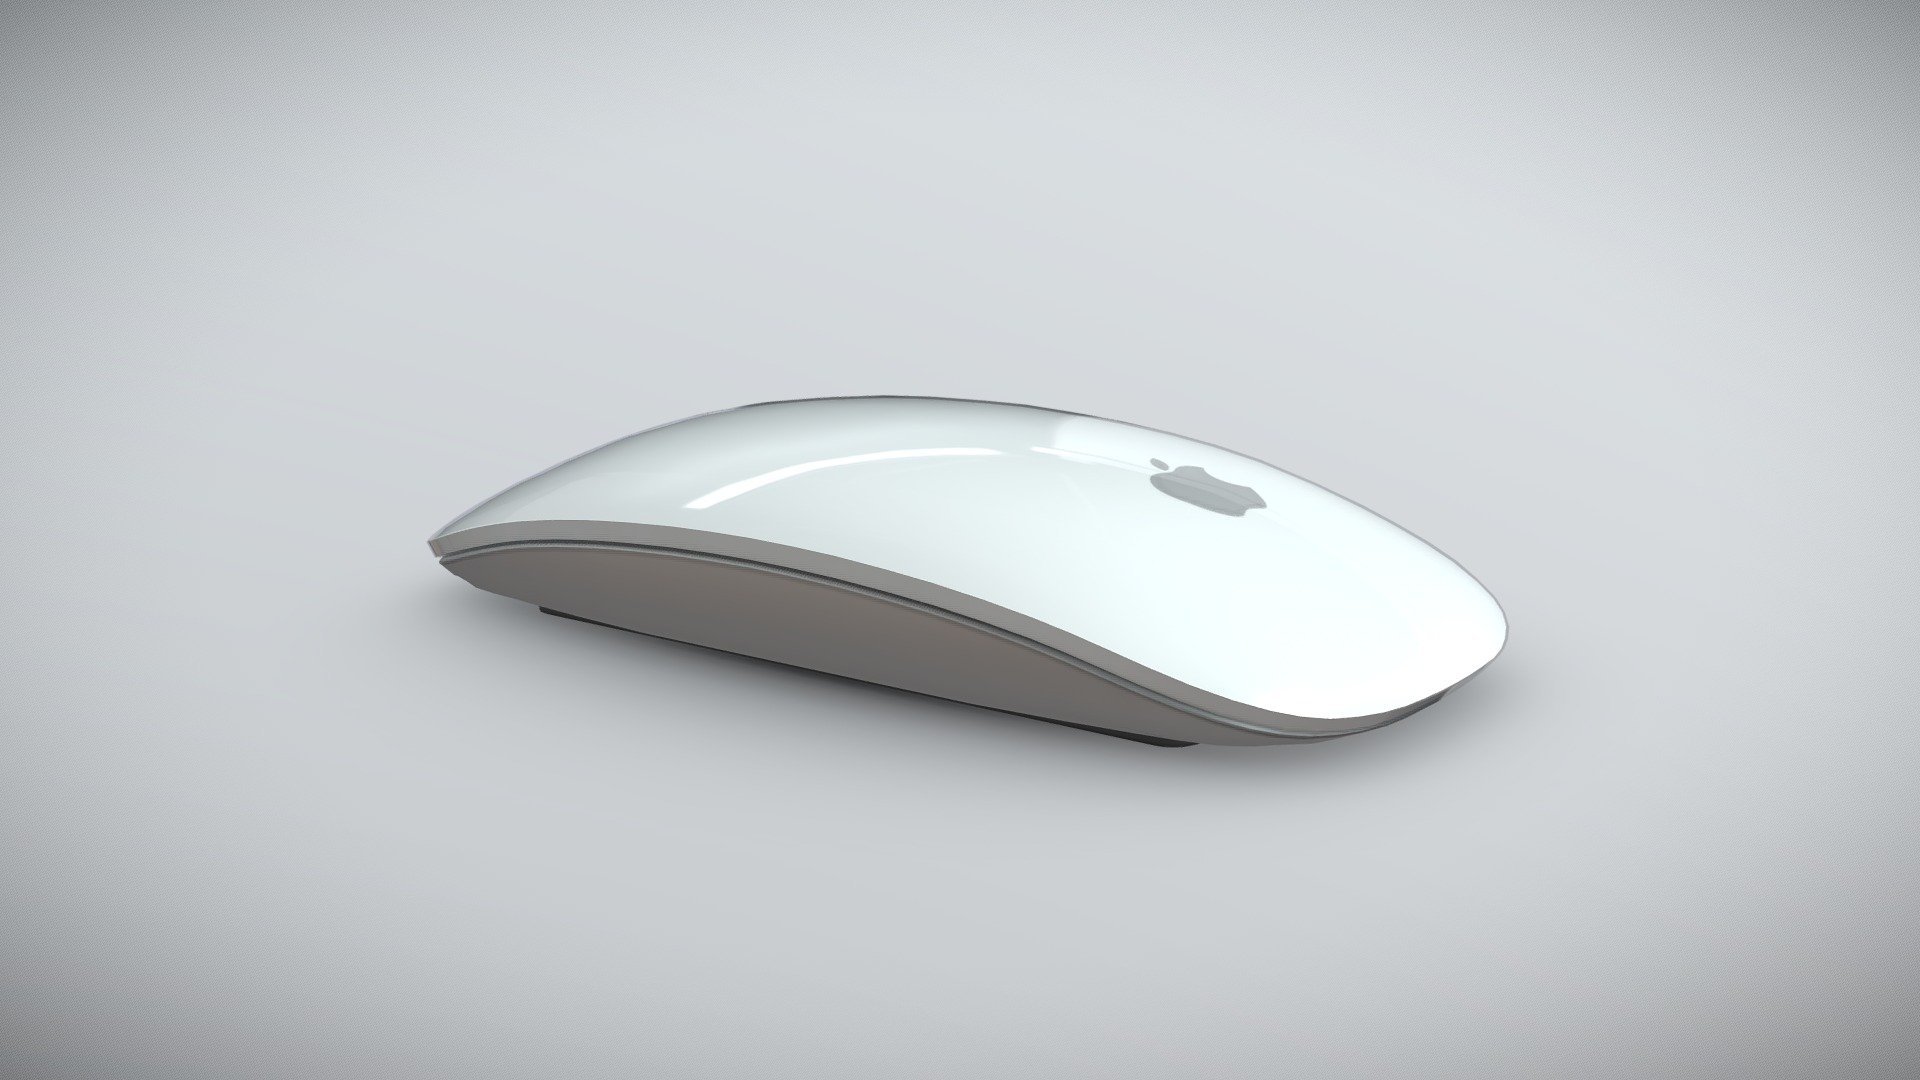 995 Apple Magic Mouse Images, Stock Photos, 3D objects, & Vectors